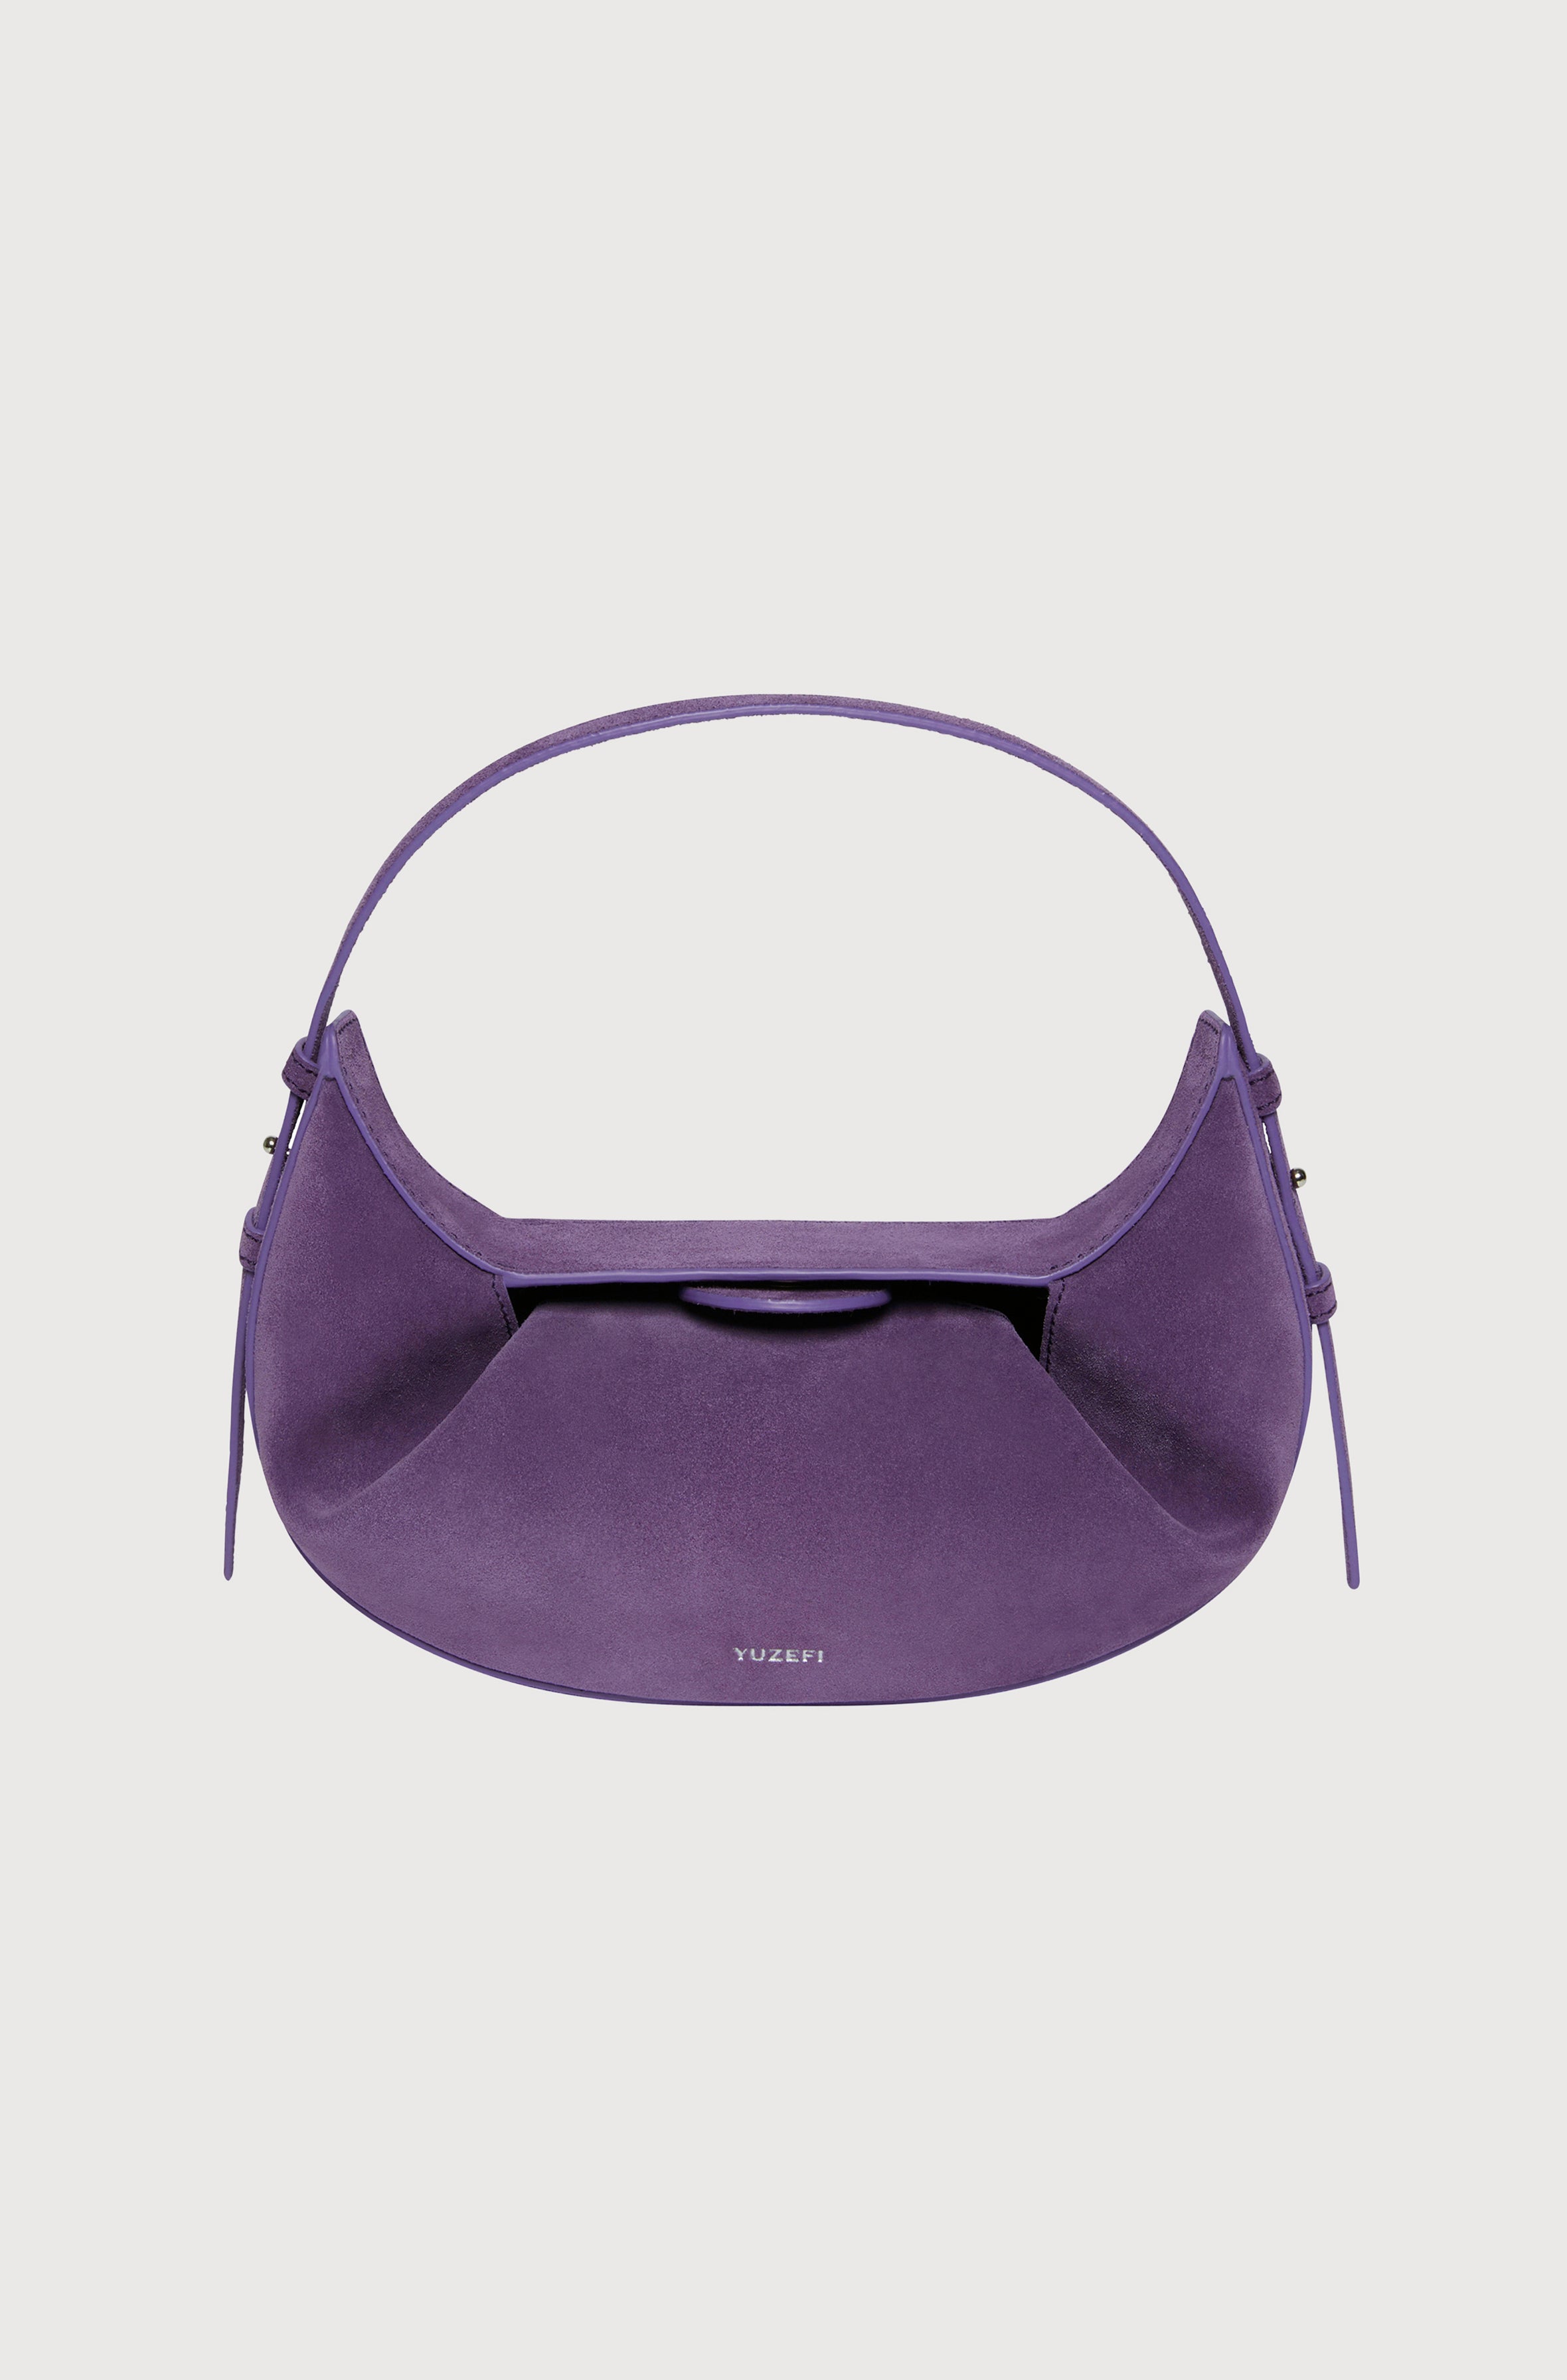 Mini Fortune Cookie Bag in Purple Leather